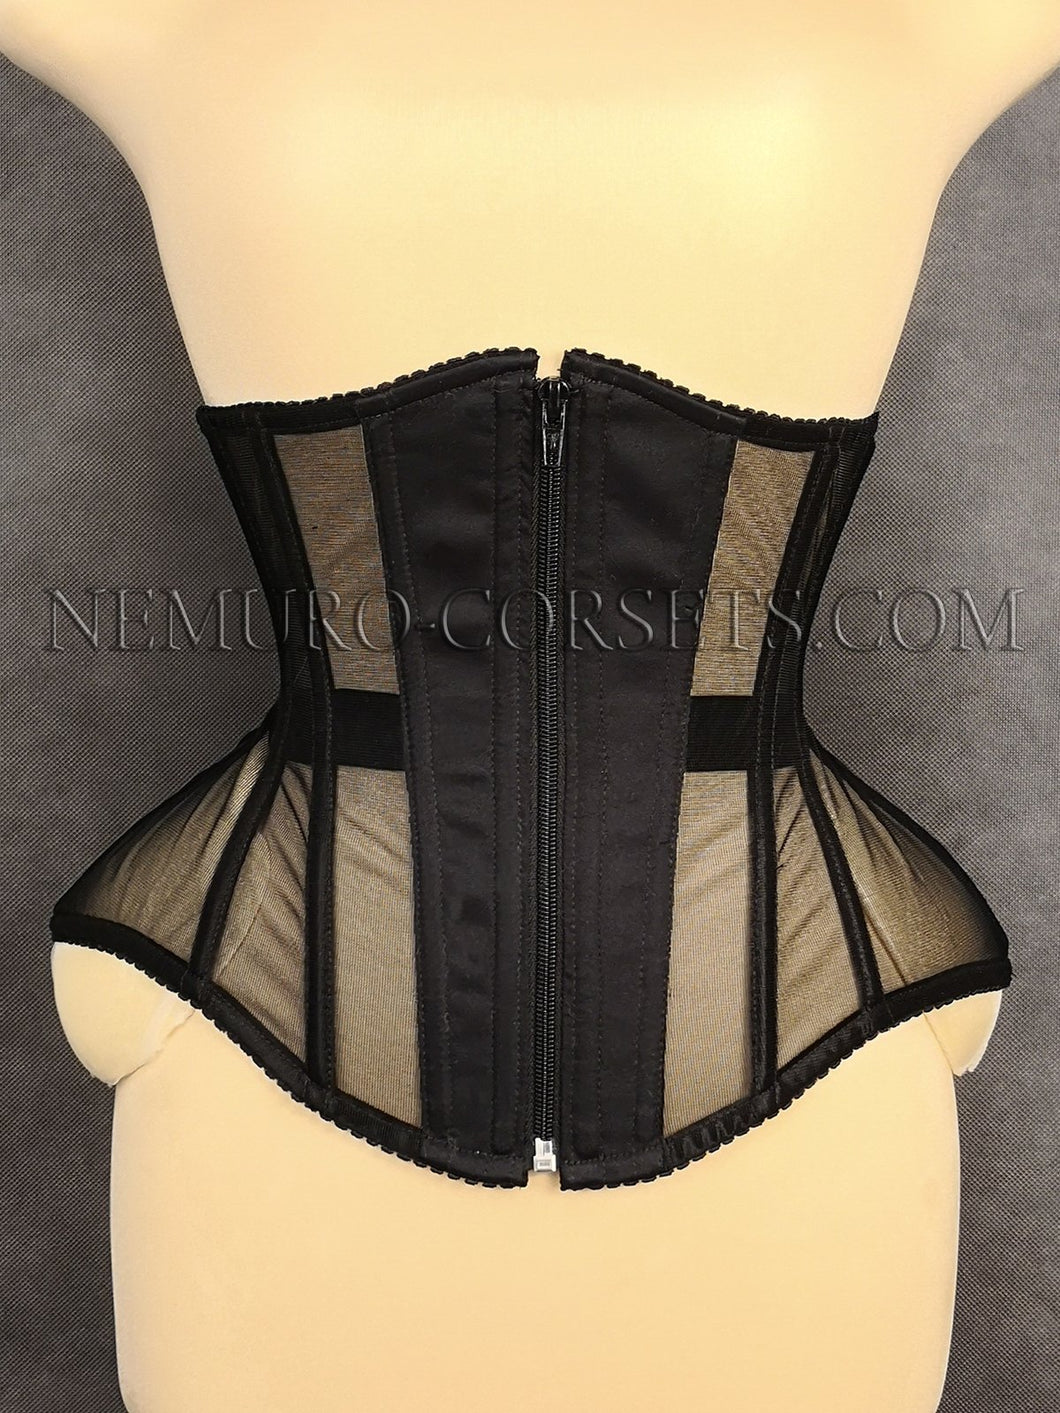 Mesh Underbust corset with busk or zipper